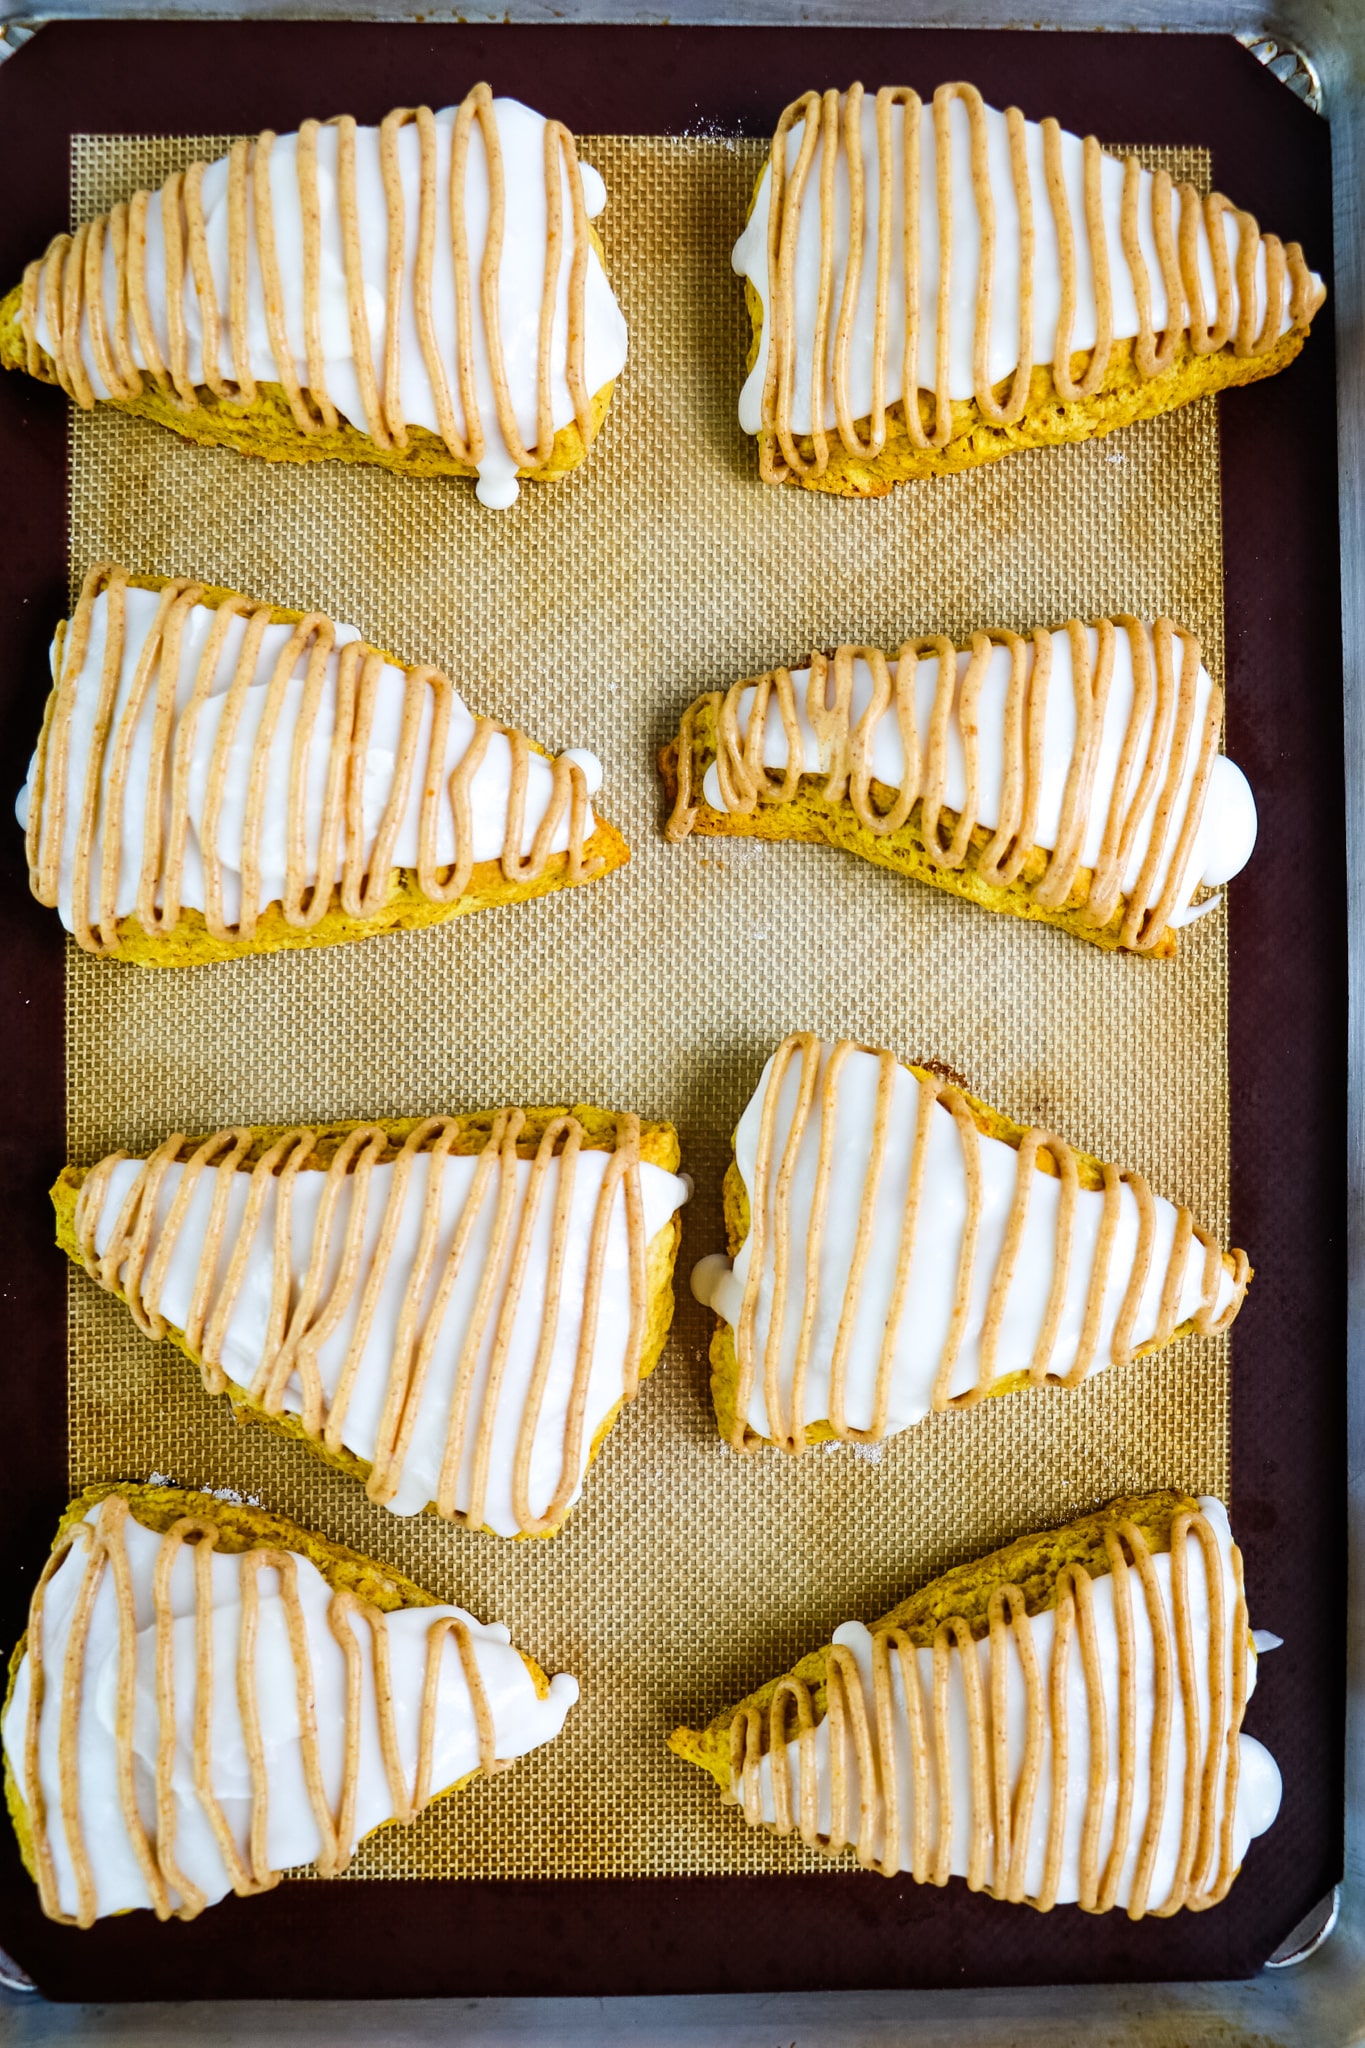 Frosted Starbucks pumpkin scones on baking sheet.